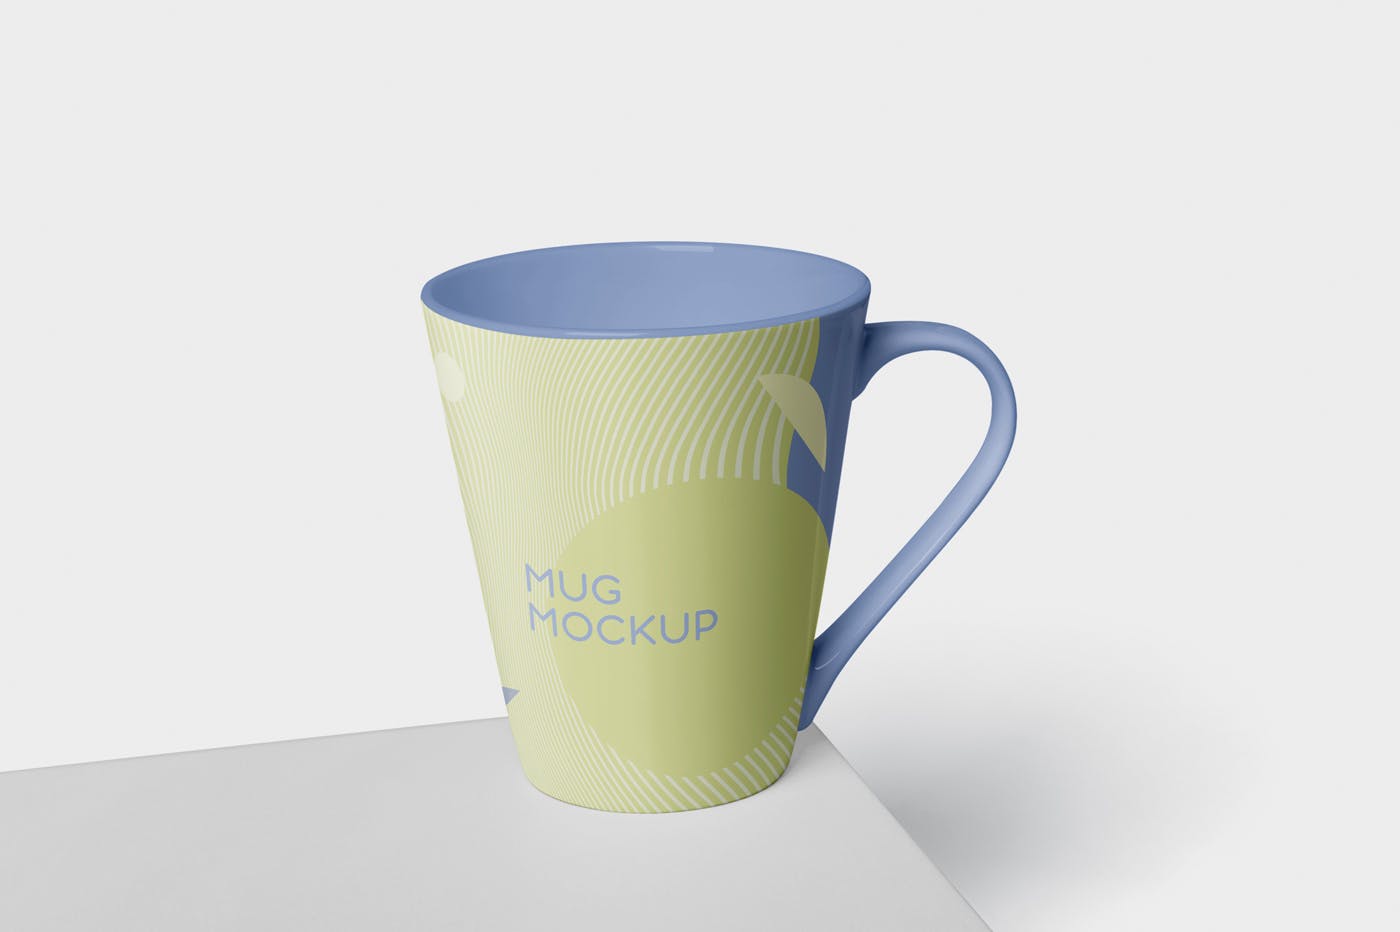 锥形马克杯图案设计非凡图库精选 Mug Mockup – Cone Shaped插图(2)